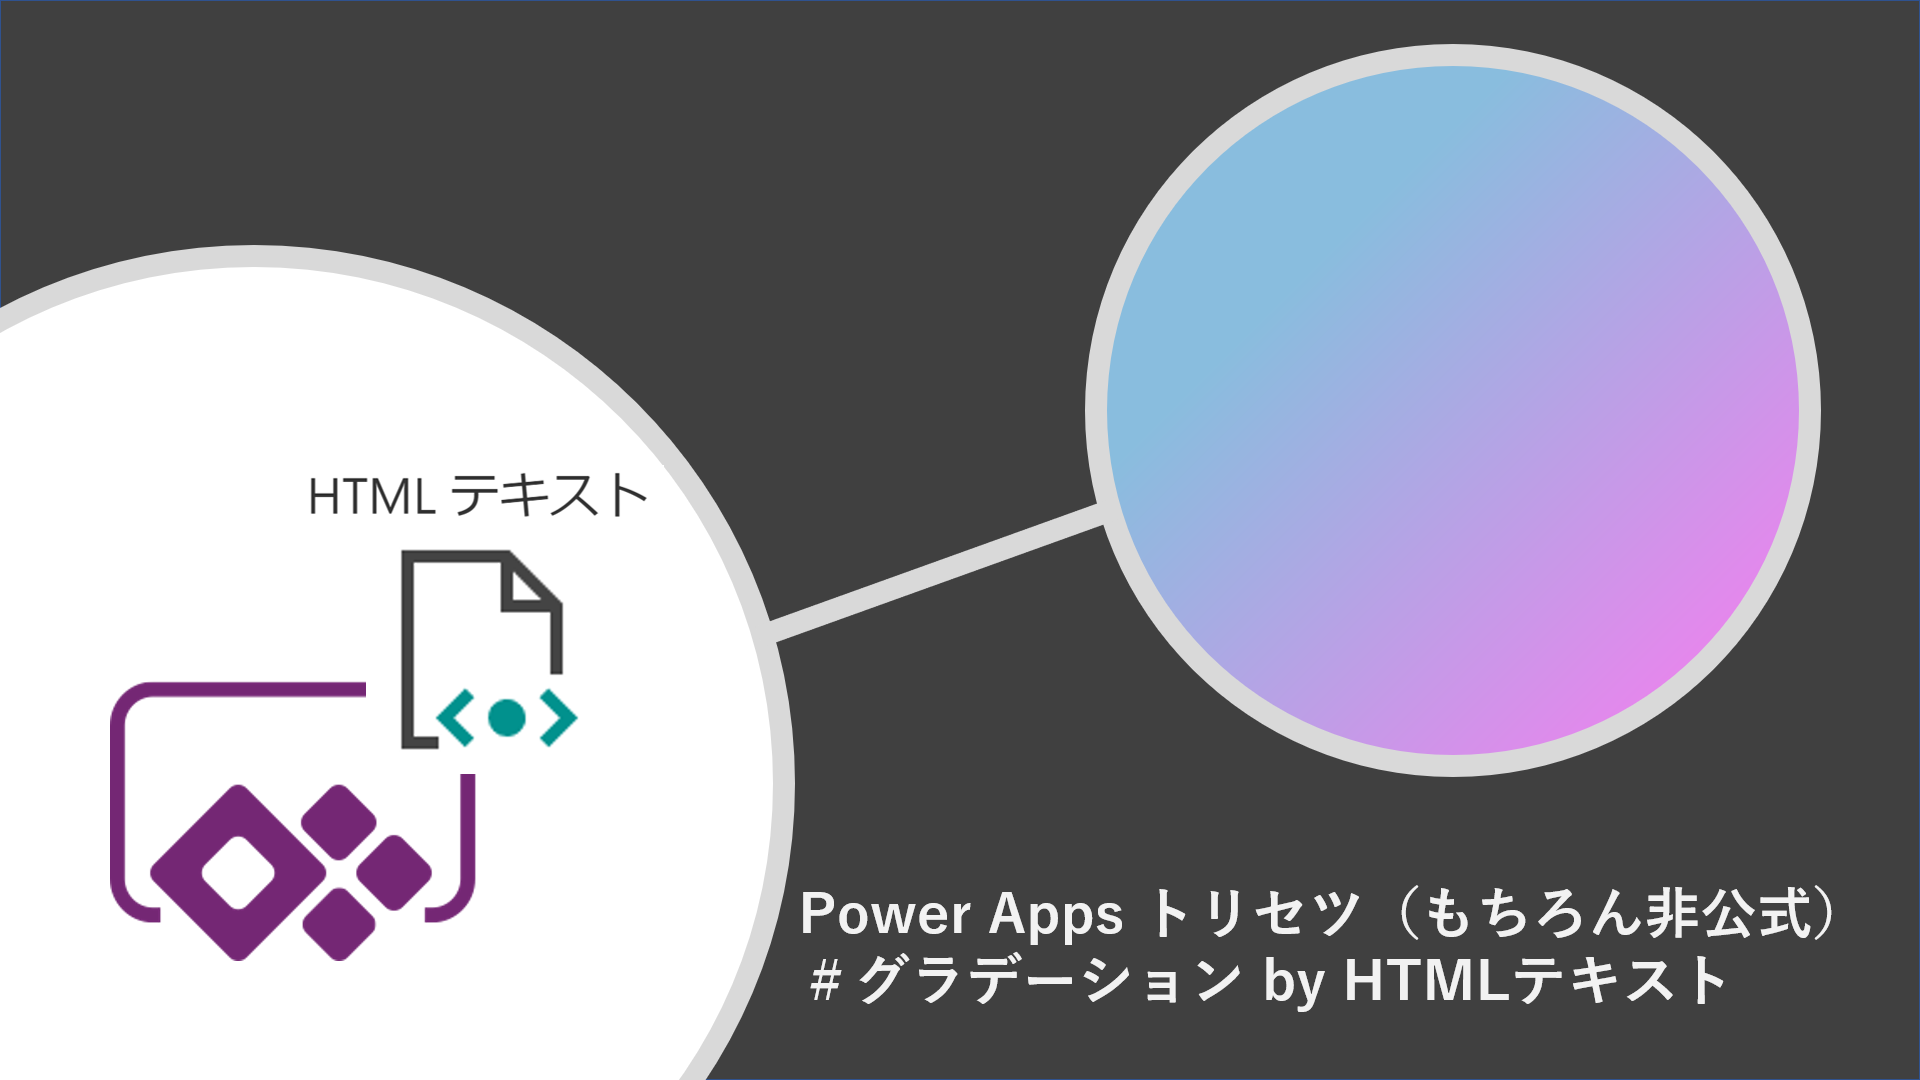 Power Apps のトリセツ（もちろん非公式） # グラデーション by HTMLテキスト